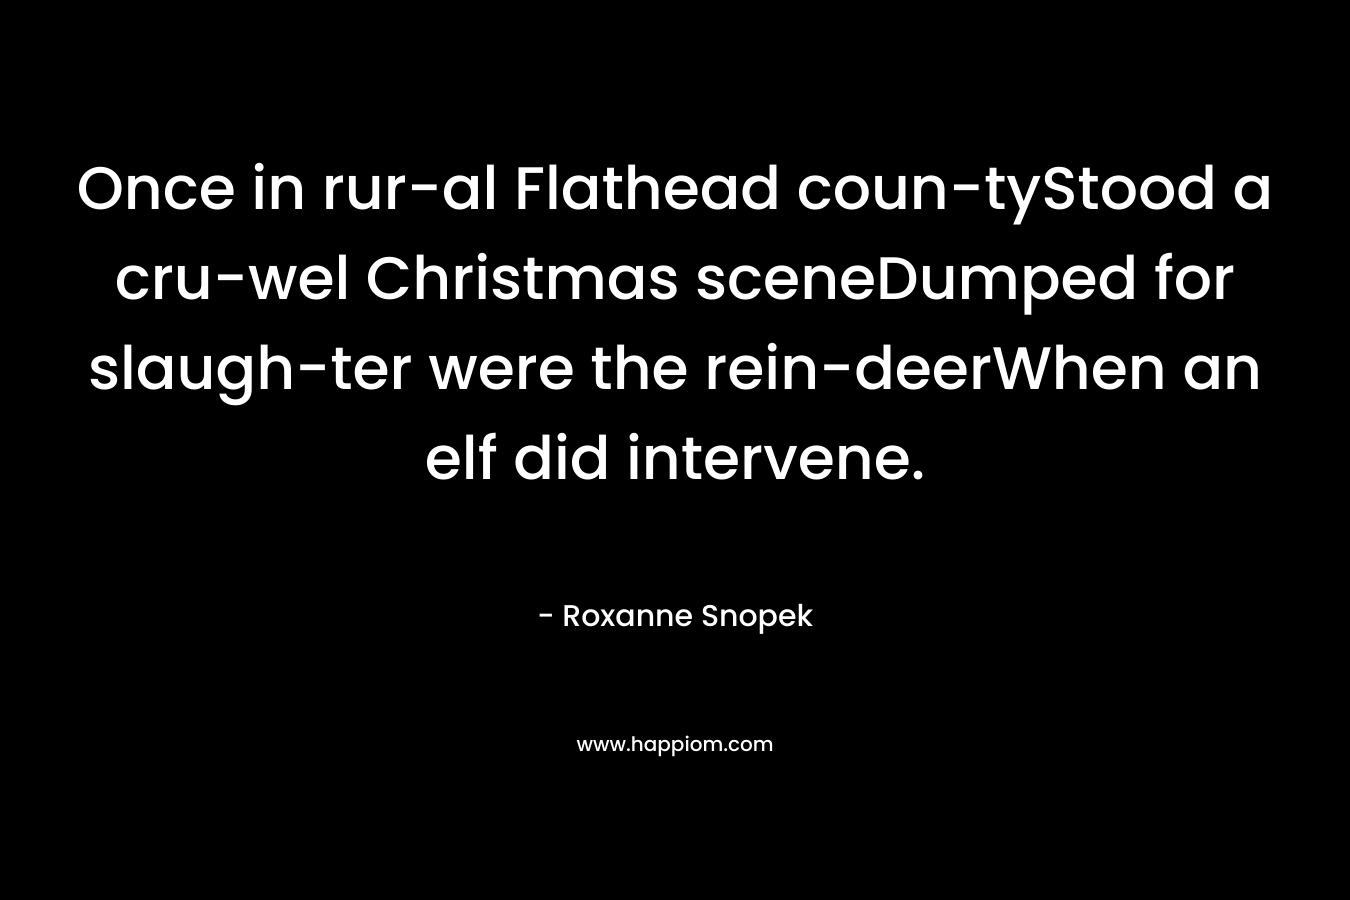 Once in rur-al Flathead coun-tyStood a cru-wel Christmas sceneDumped for slaugh-ter were the rein-deerWhen an elf did intervene.